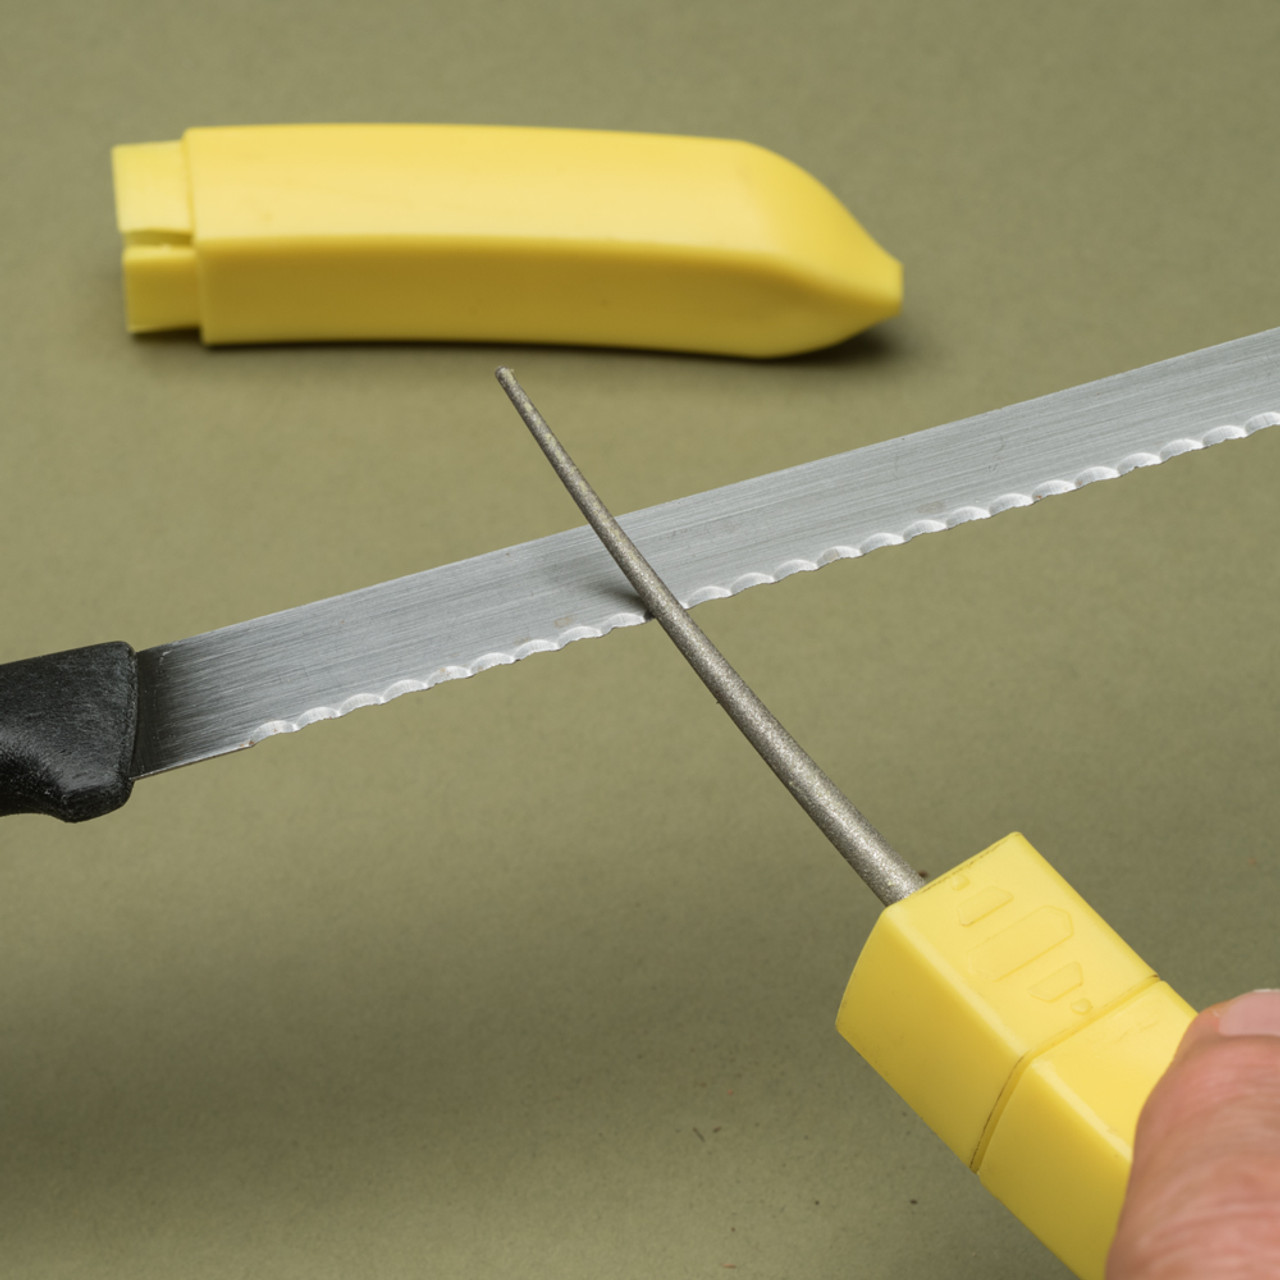 Butter Knife Crafting: A How-To - Garrett Wade